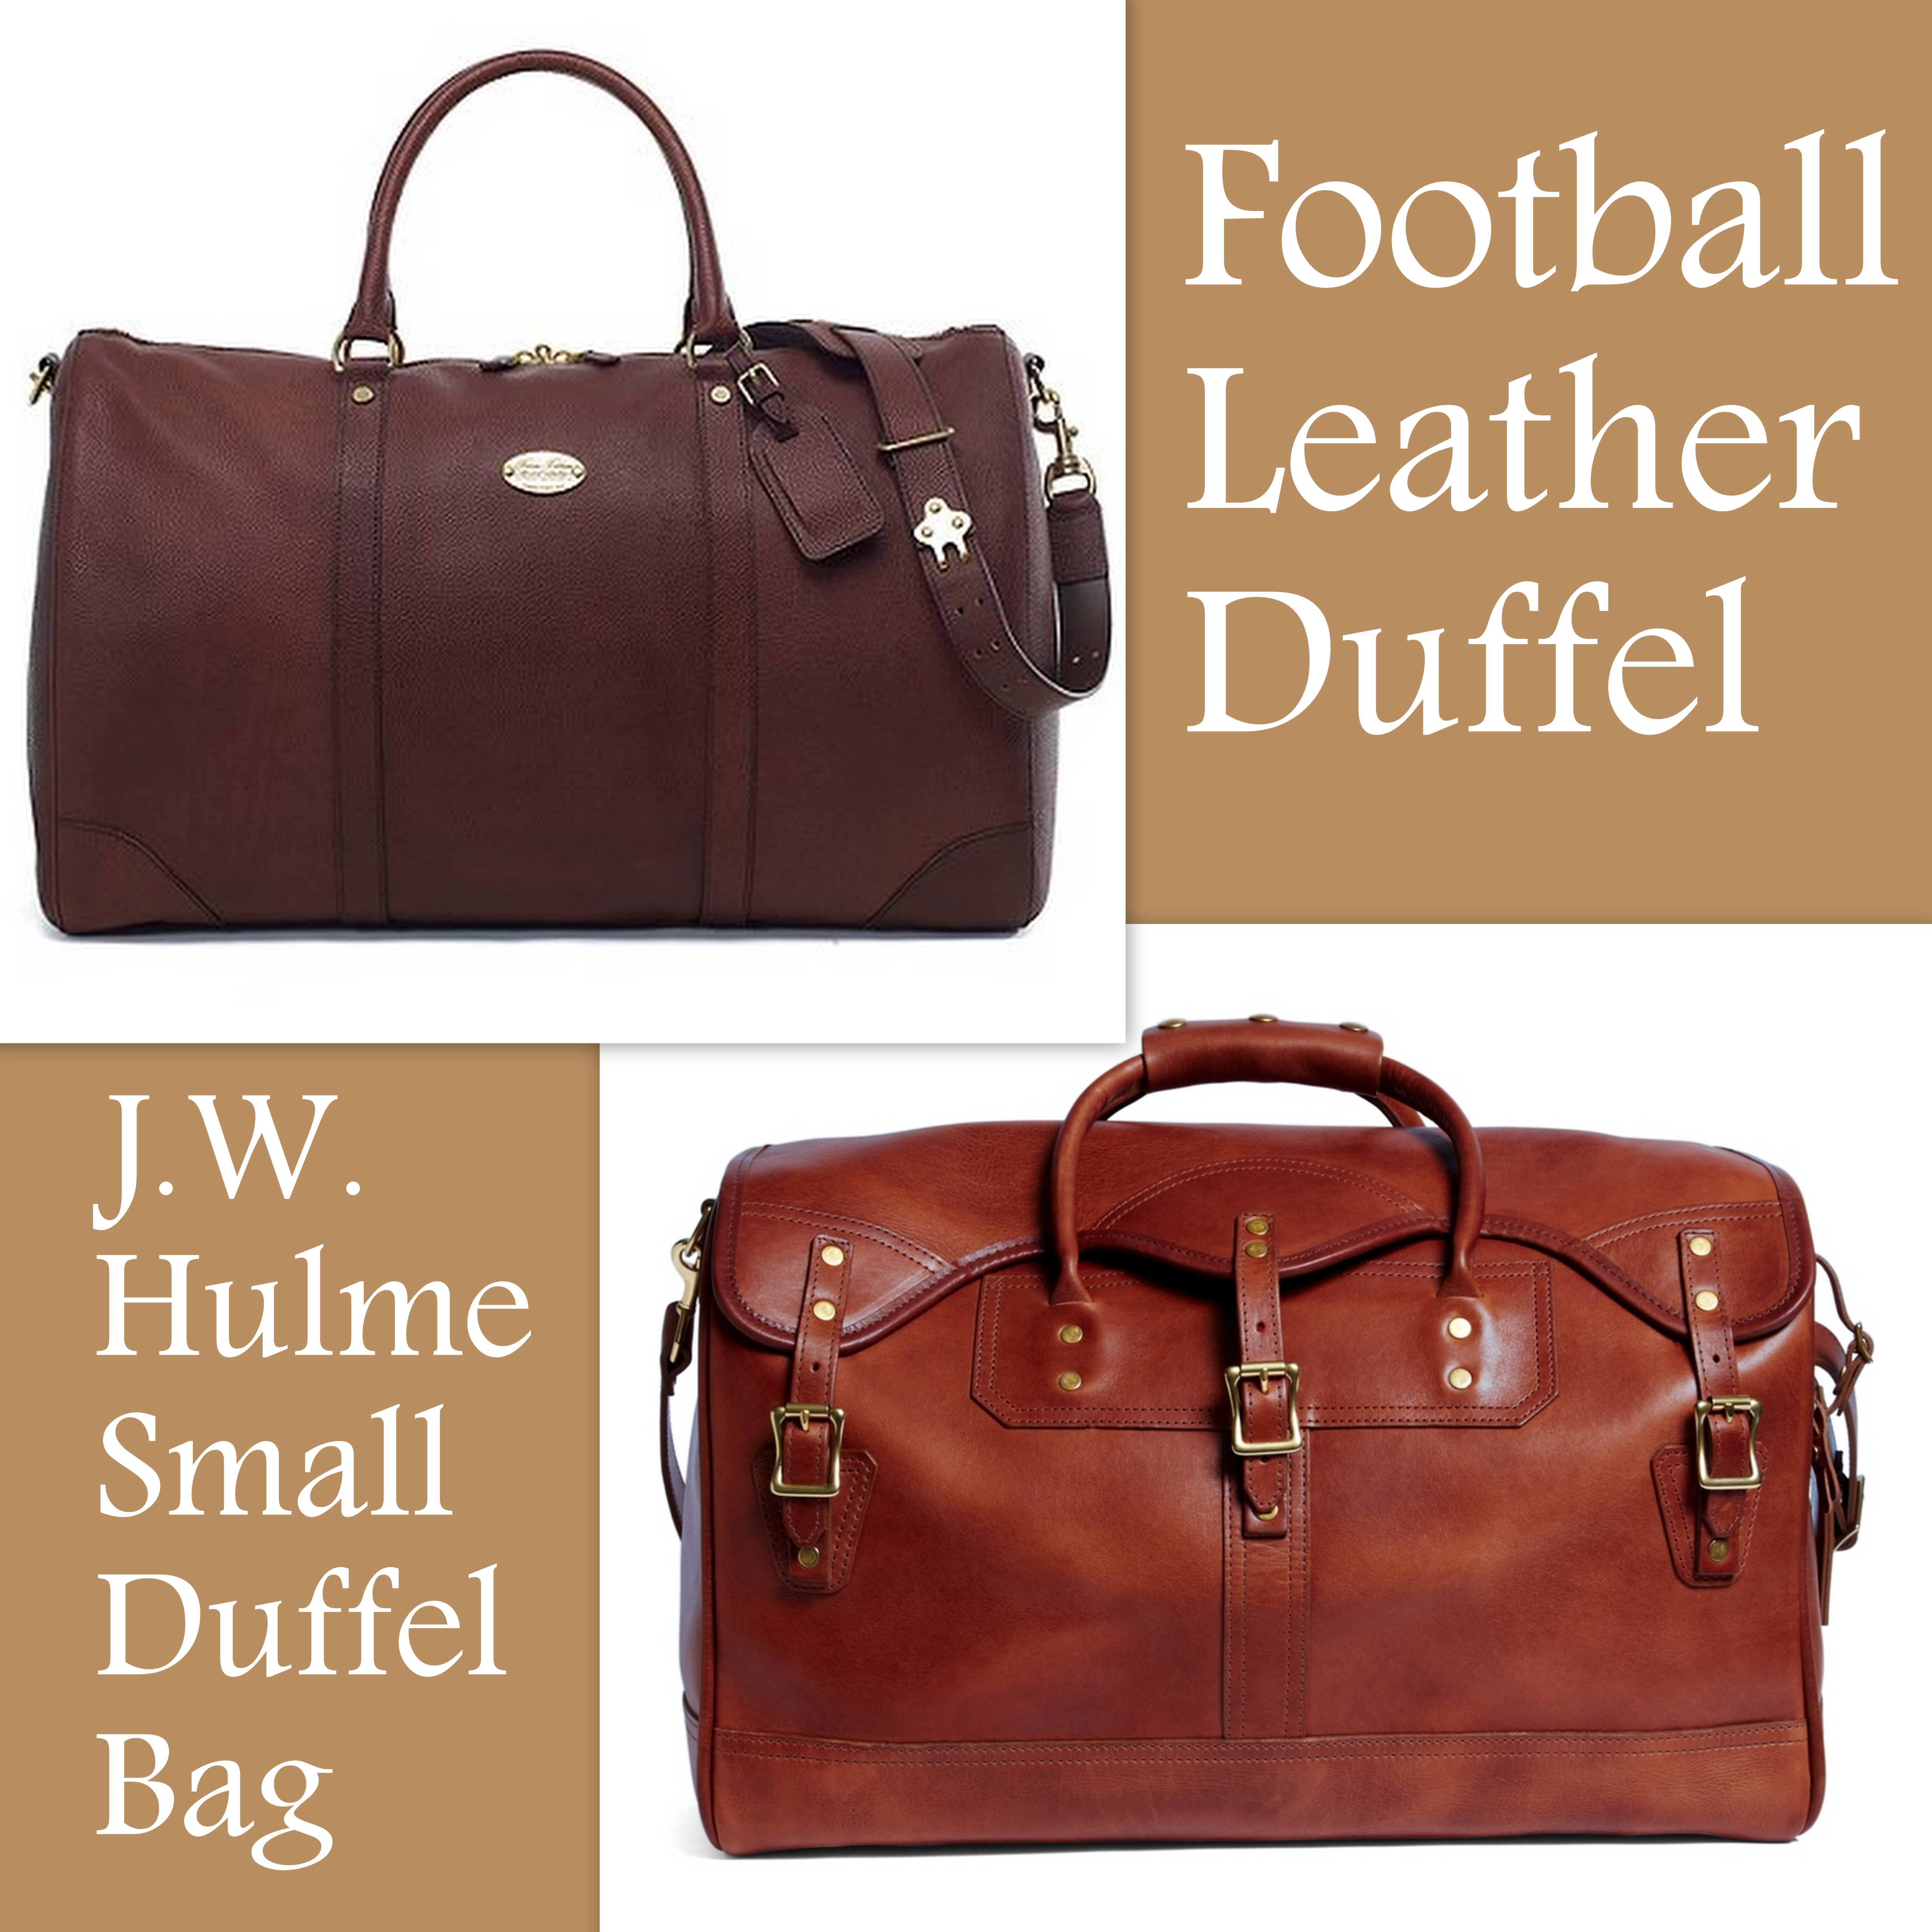 Football Leather Duffel | The Hostess List